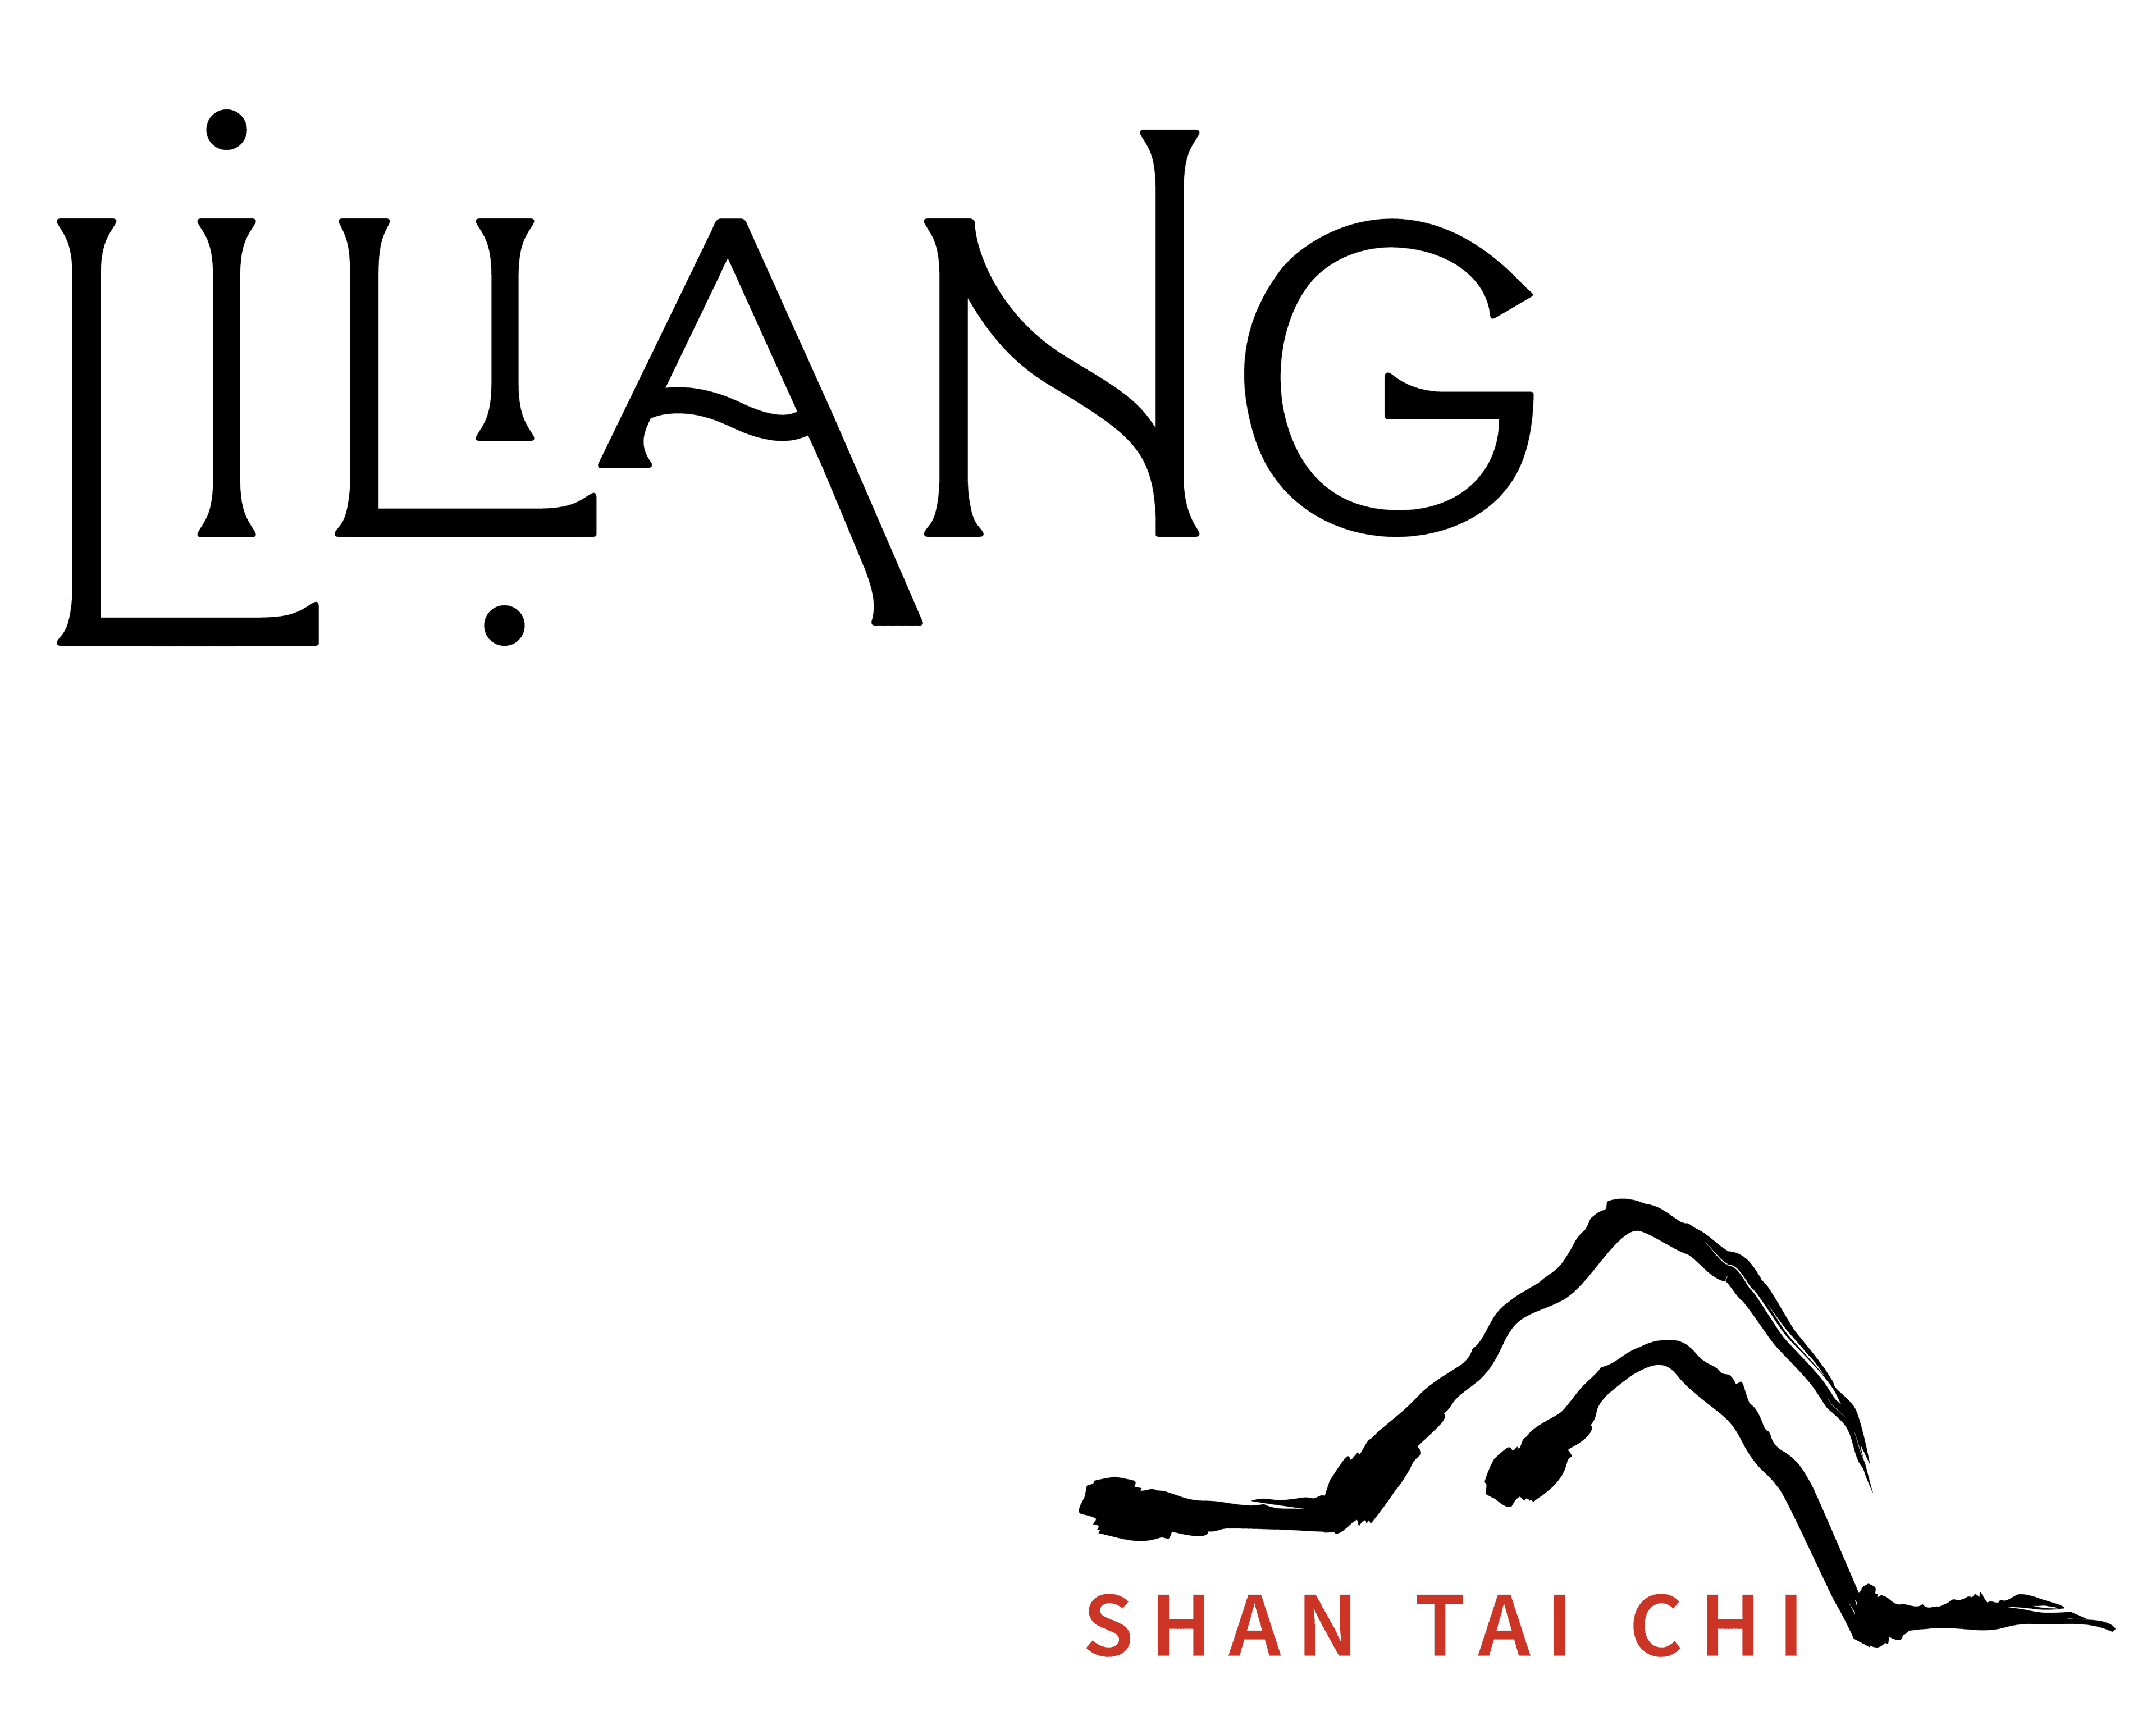 Liliang logo